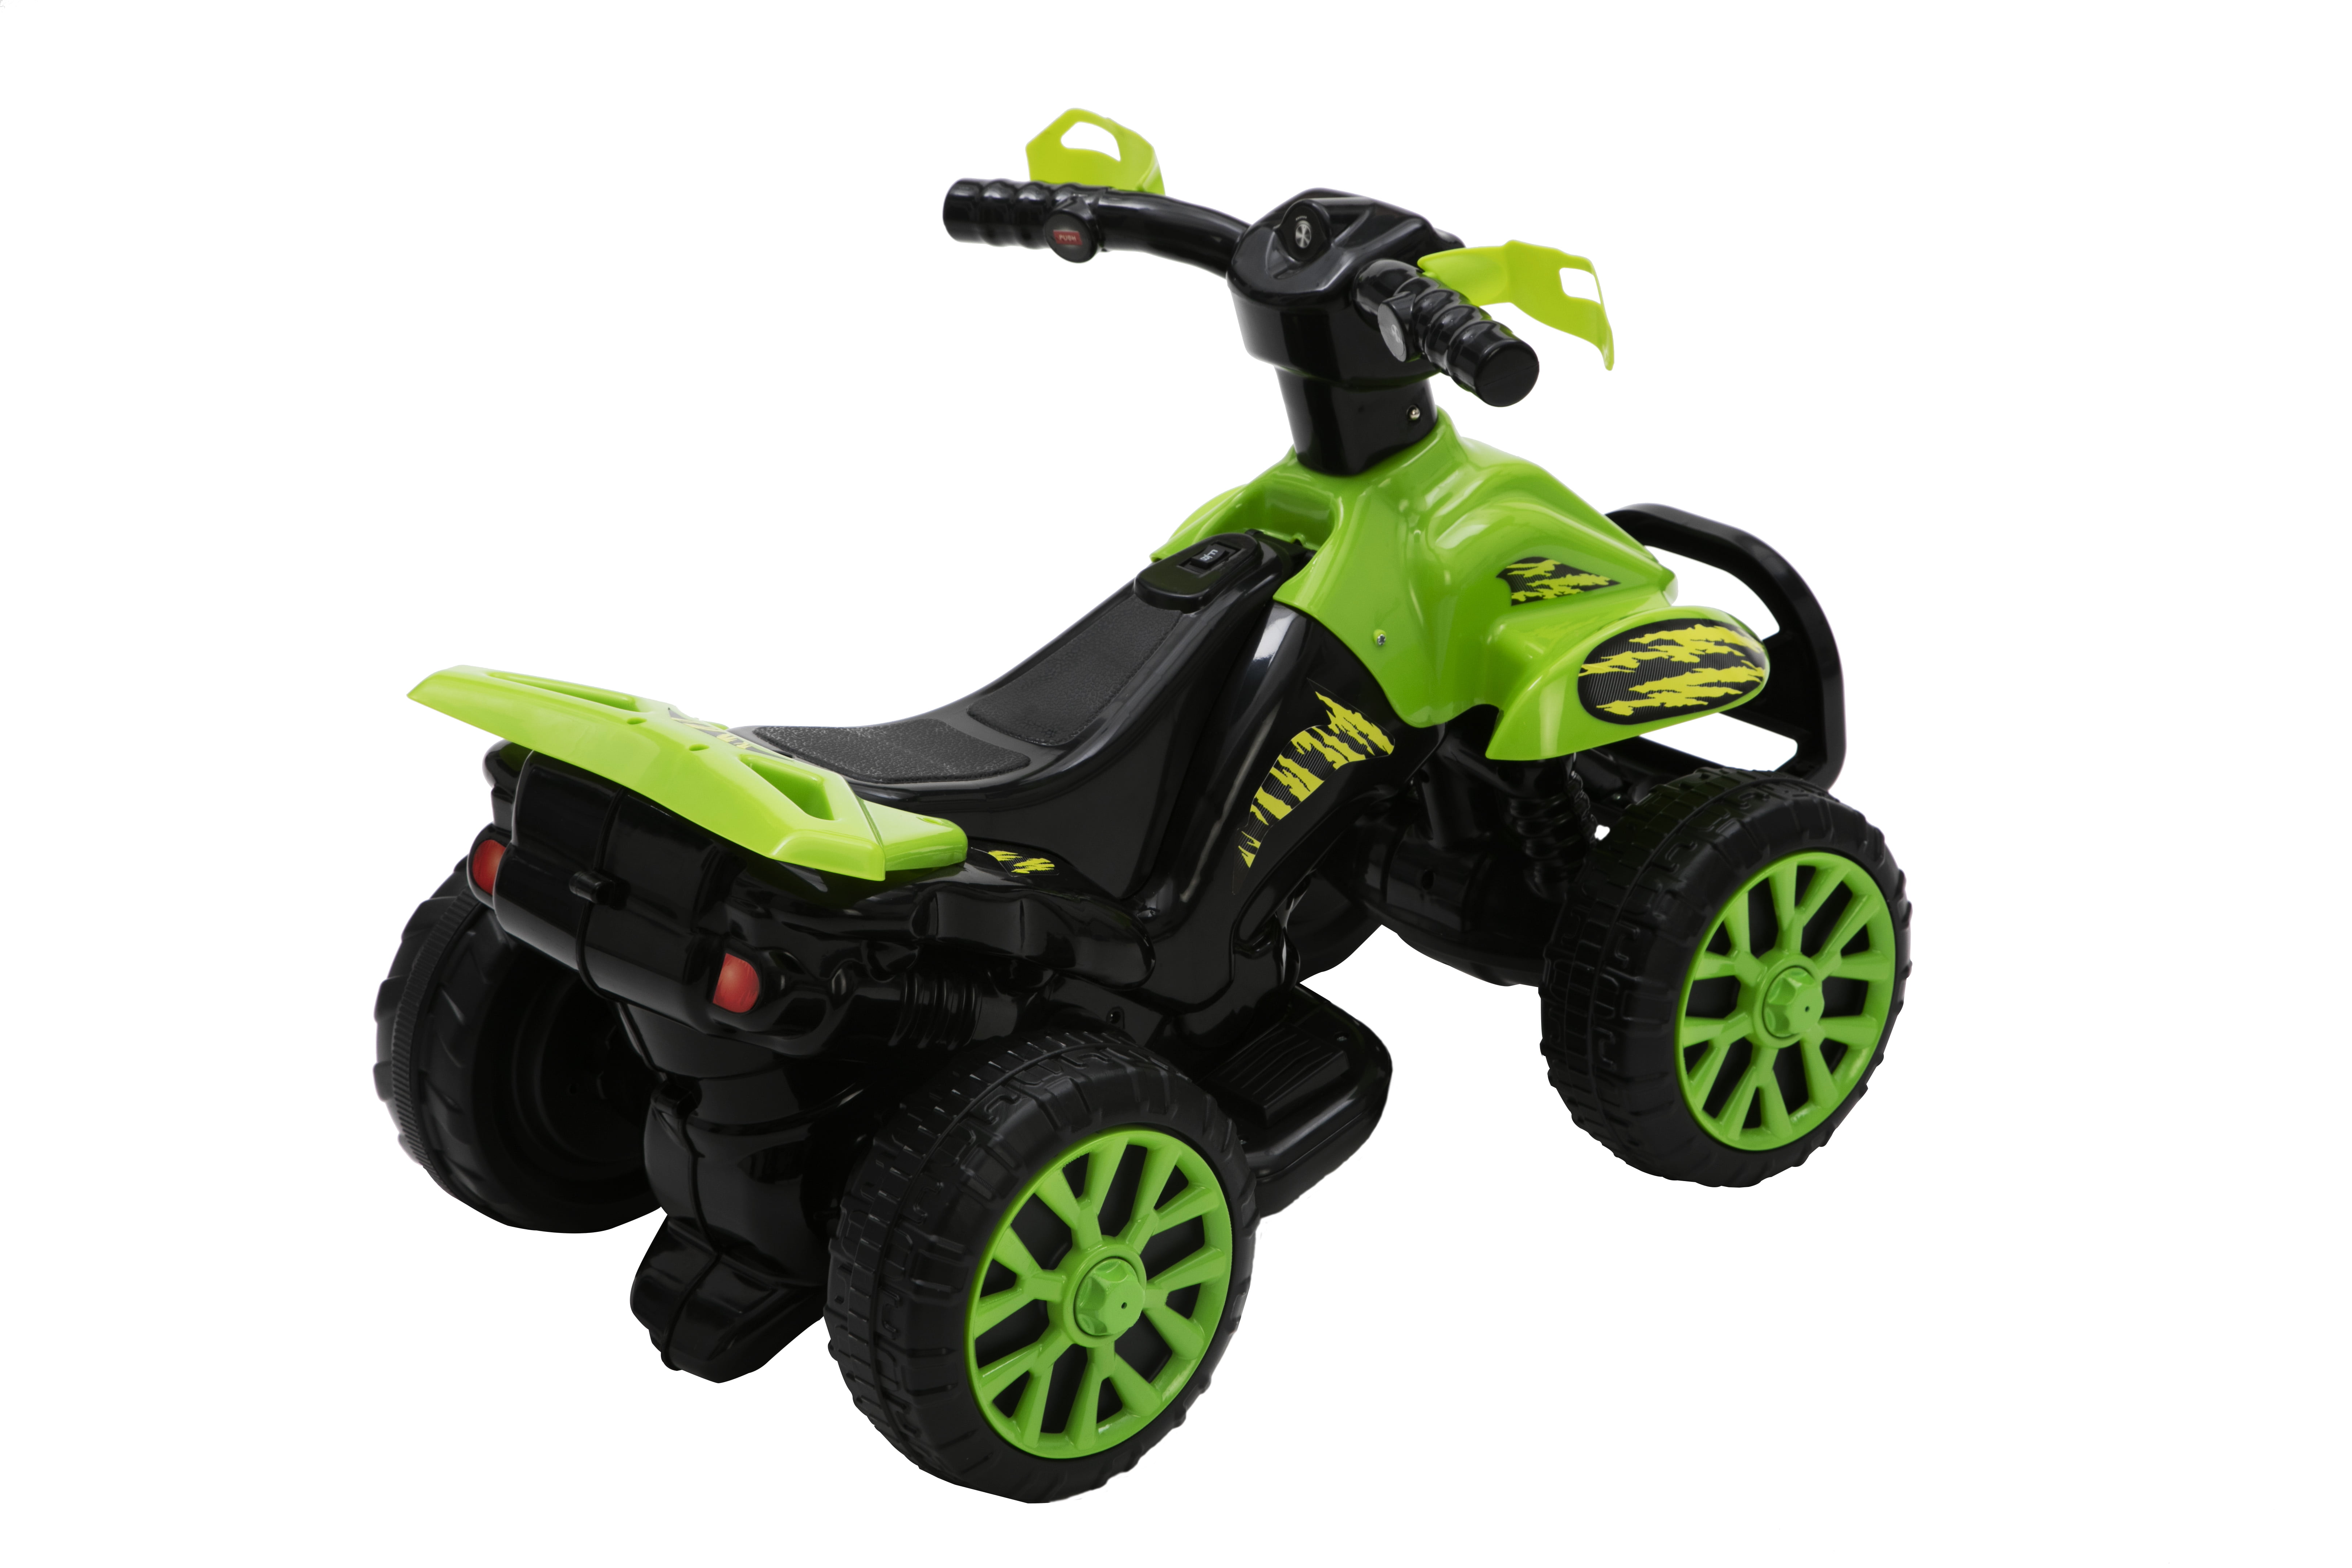 Kalee Green Quad ATV 6 Volt Ride on Car 